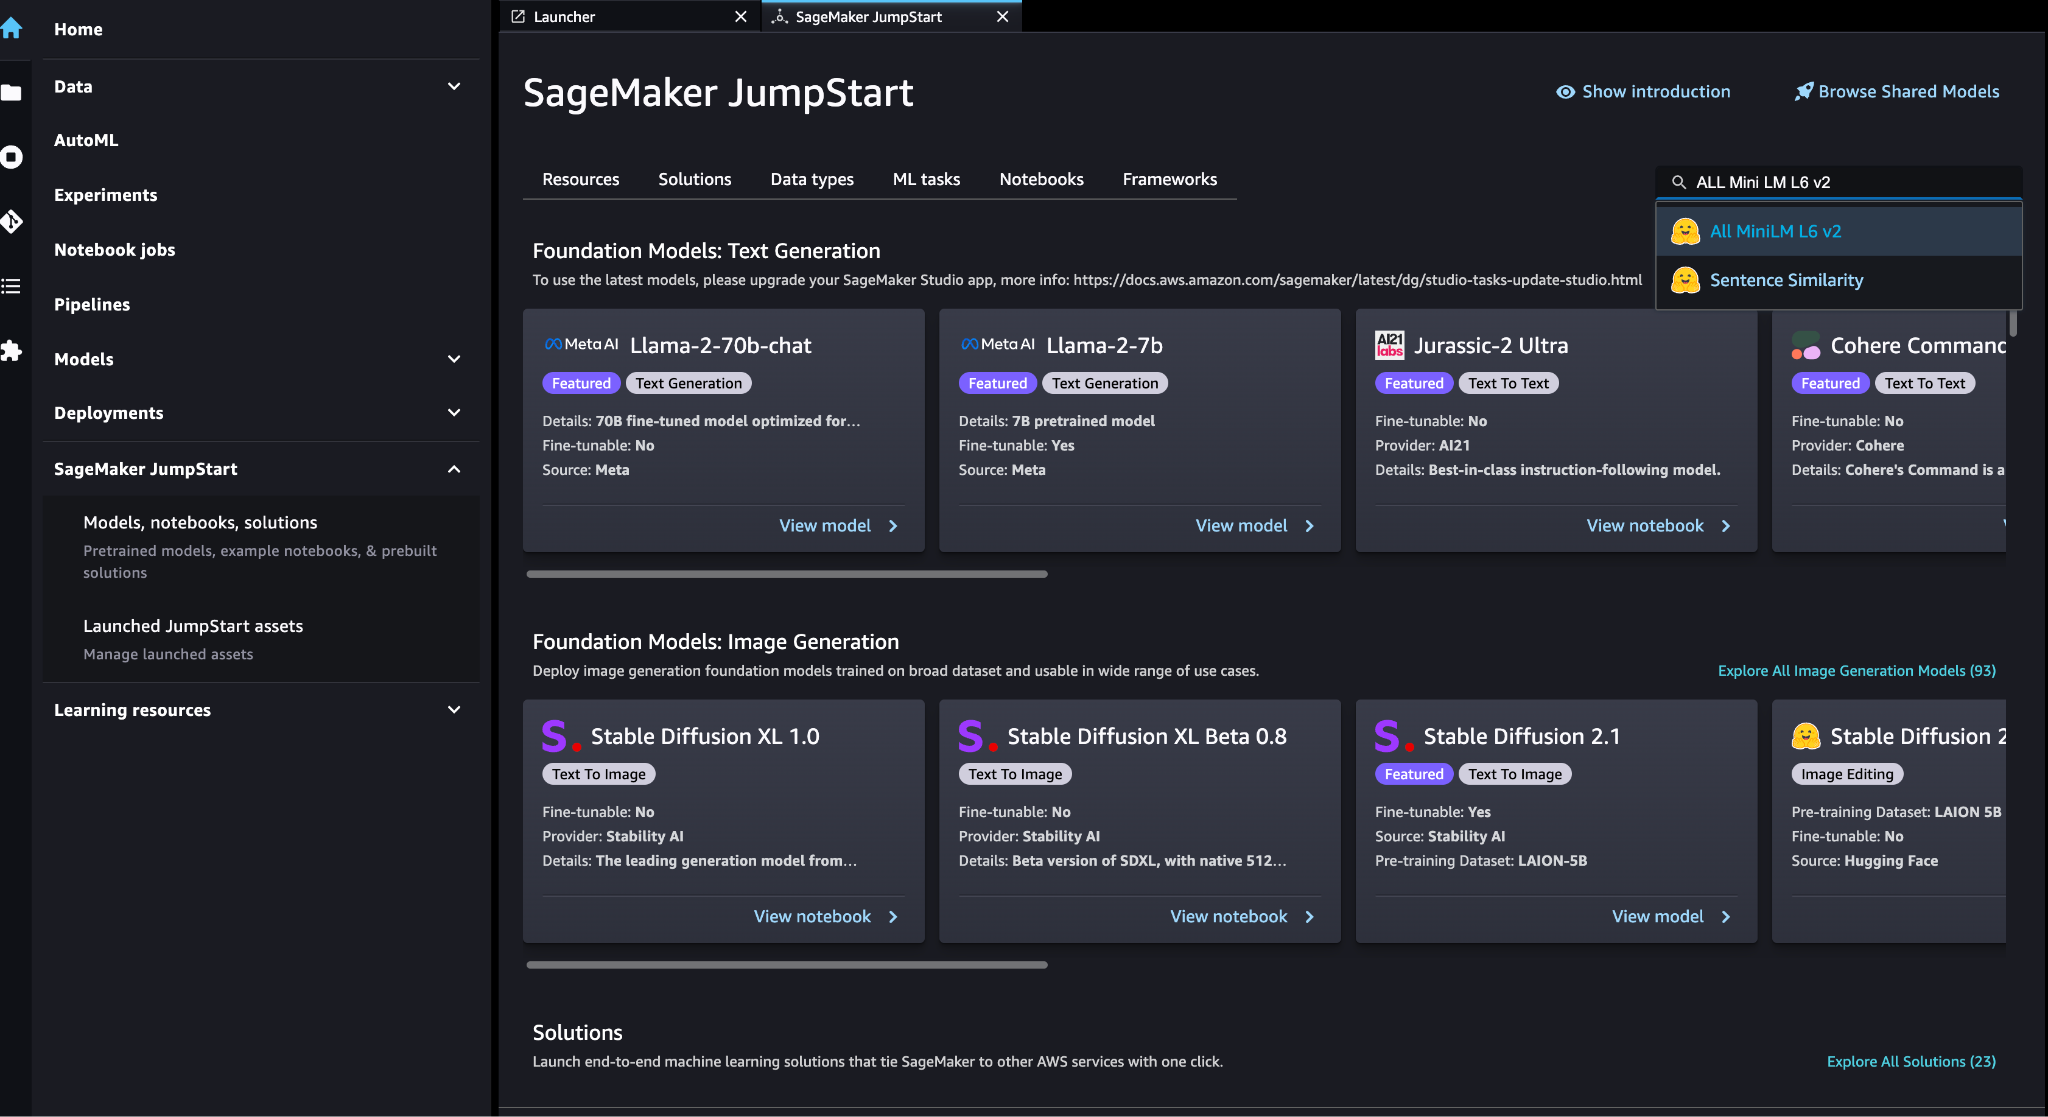 SageMaker JumpStart Modelle, Notebooks, Lösungen